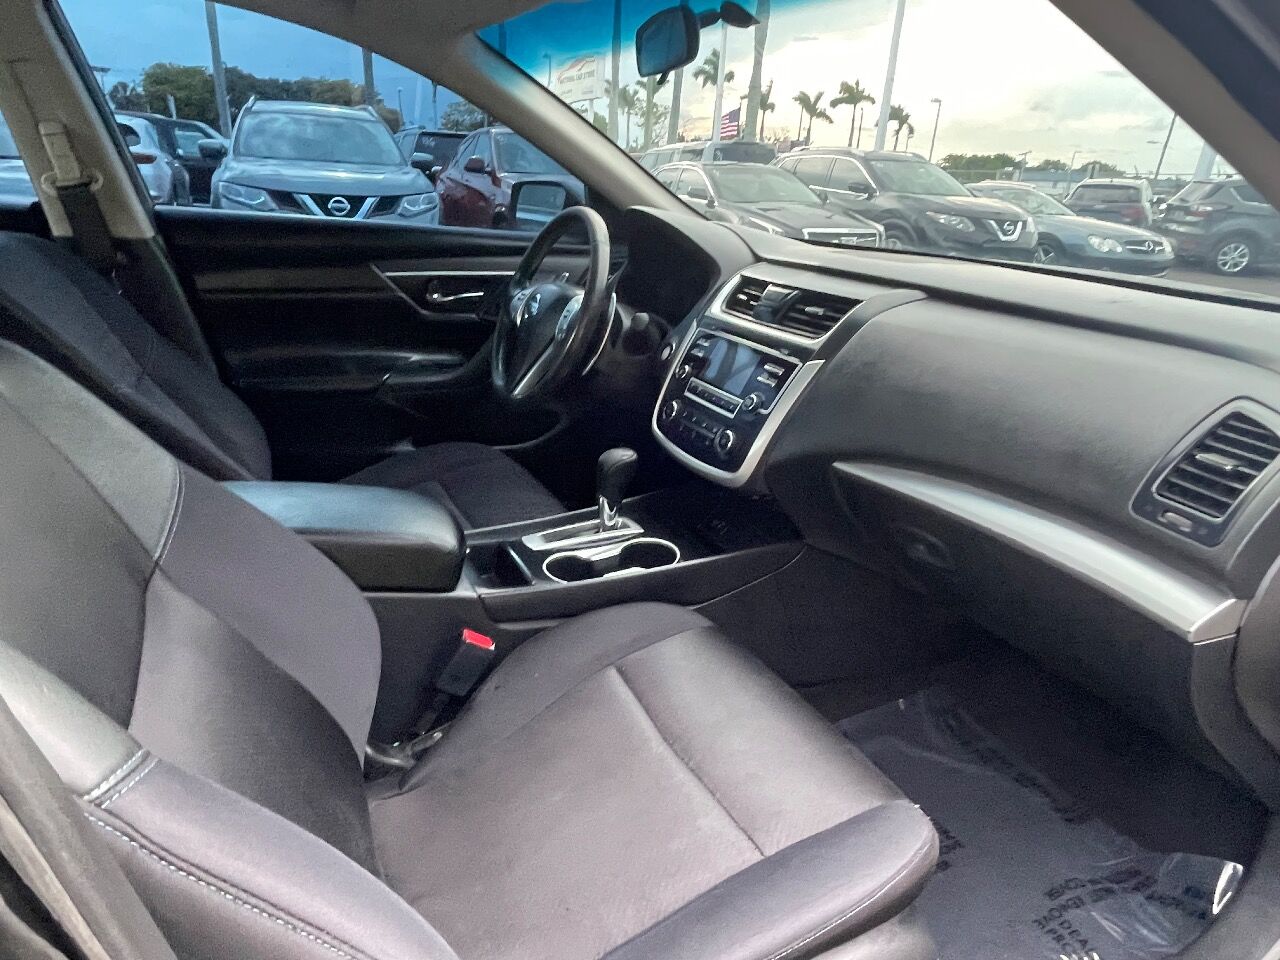 2017 Nissan Altima Sedan - $11,900